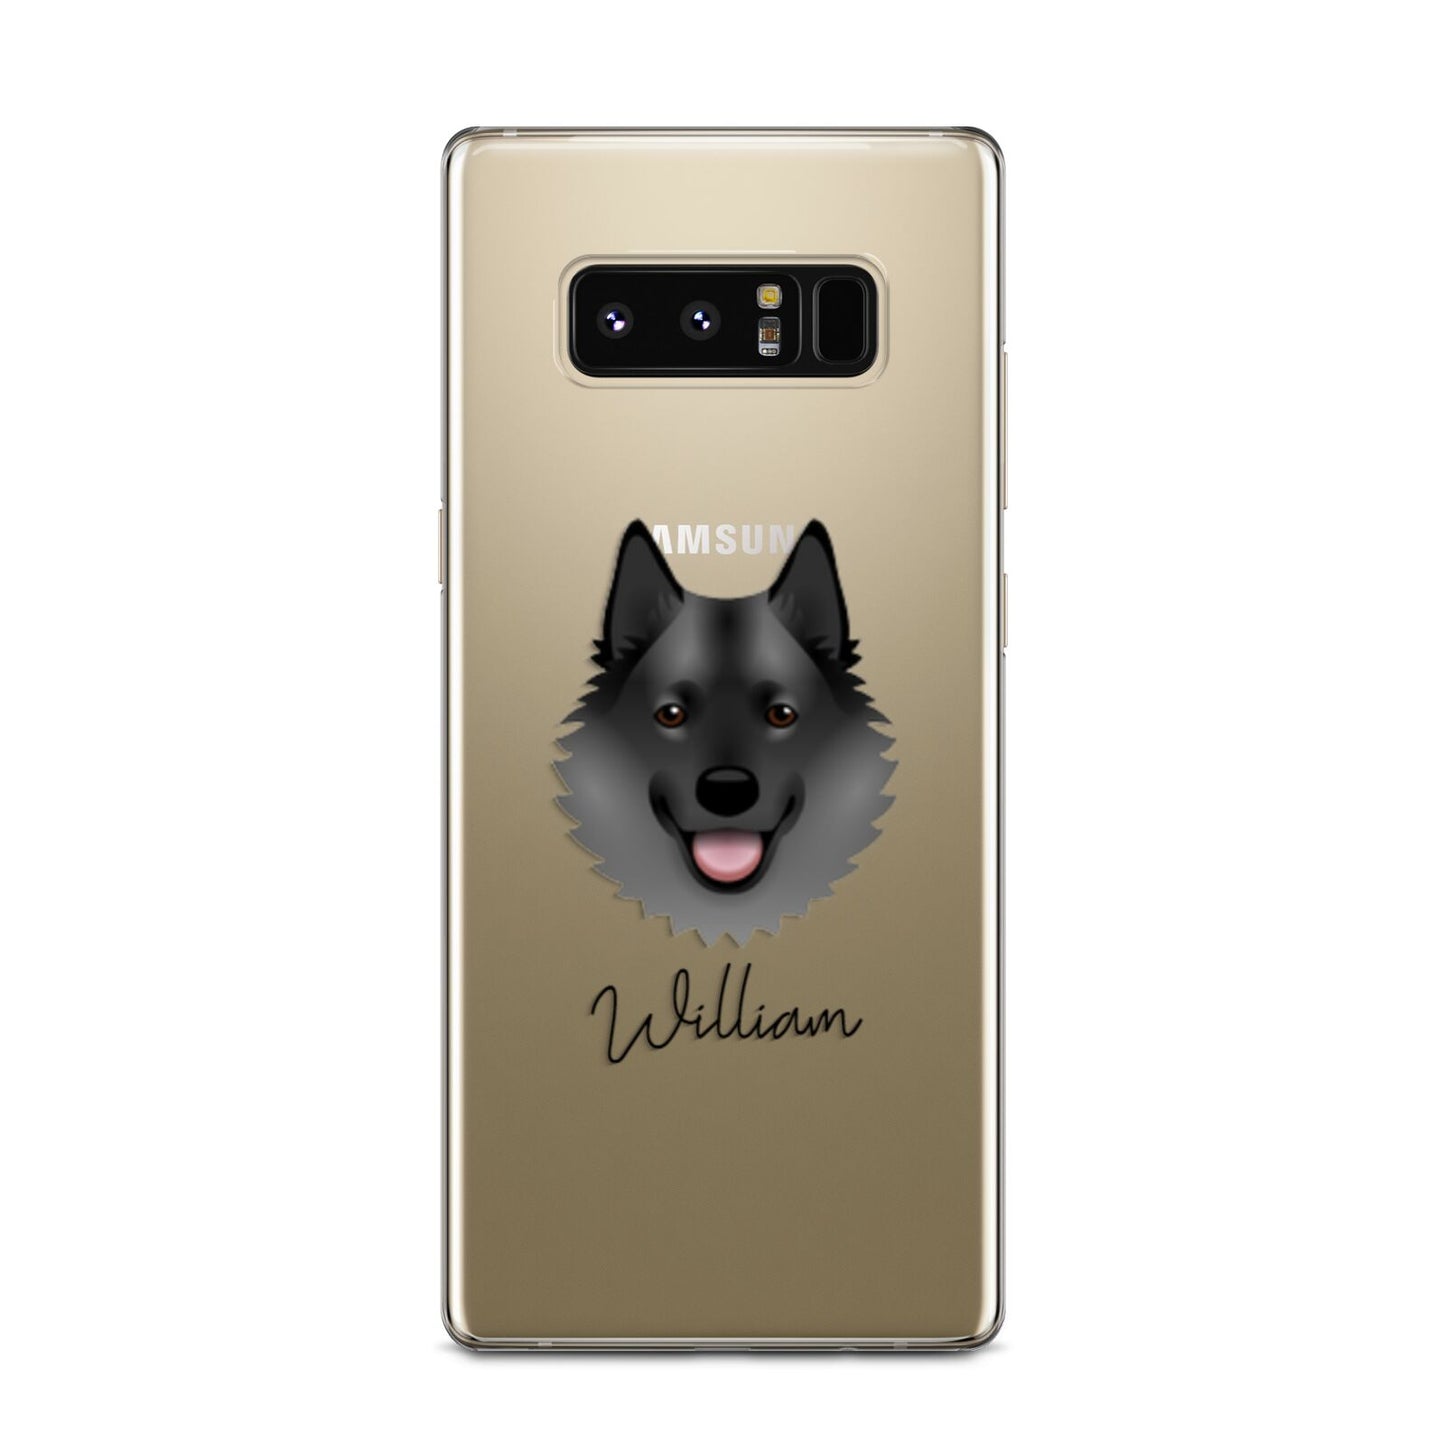 Norwegian Elkhound Personalised Samsung Galaxy Note 8 Case